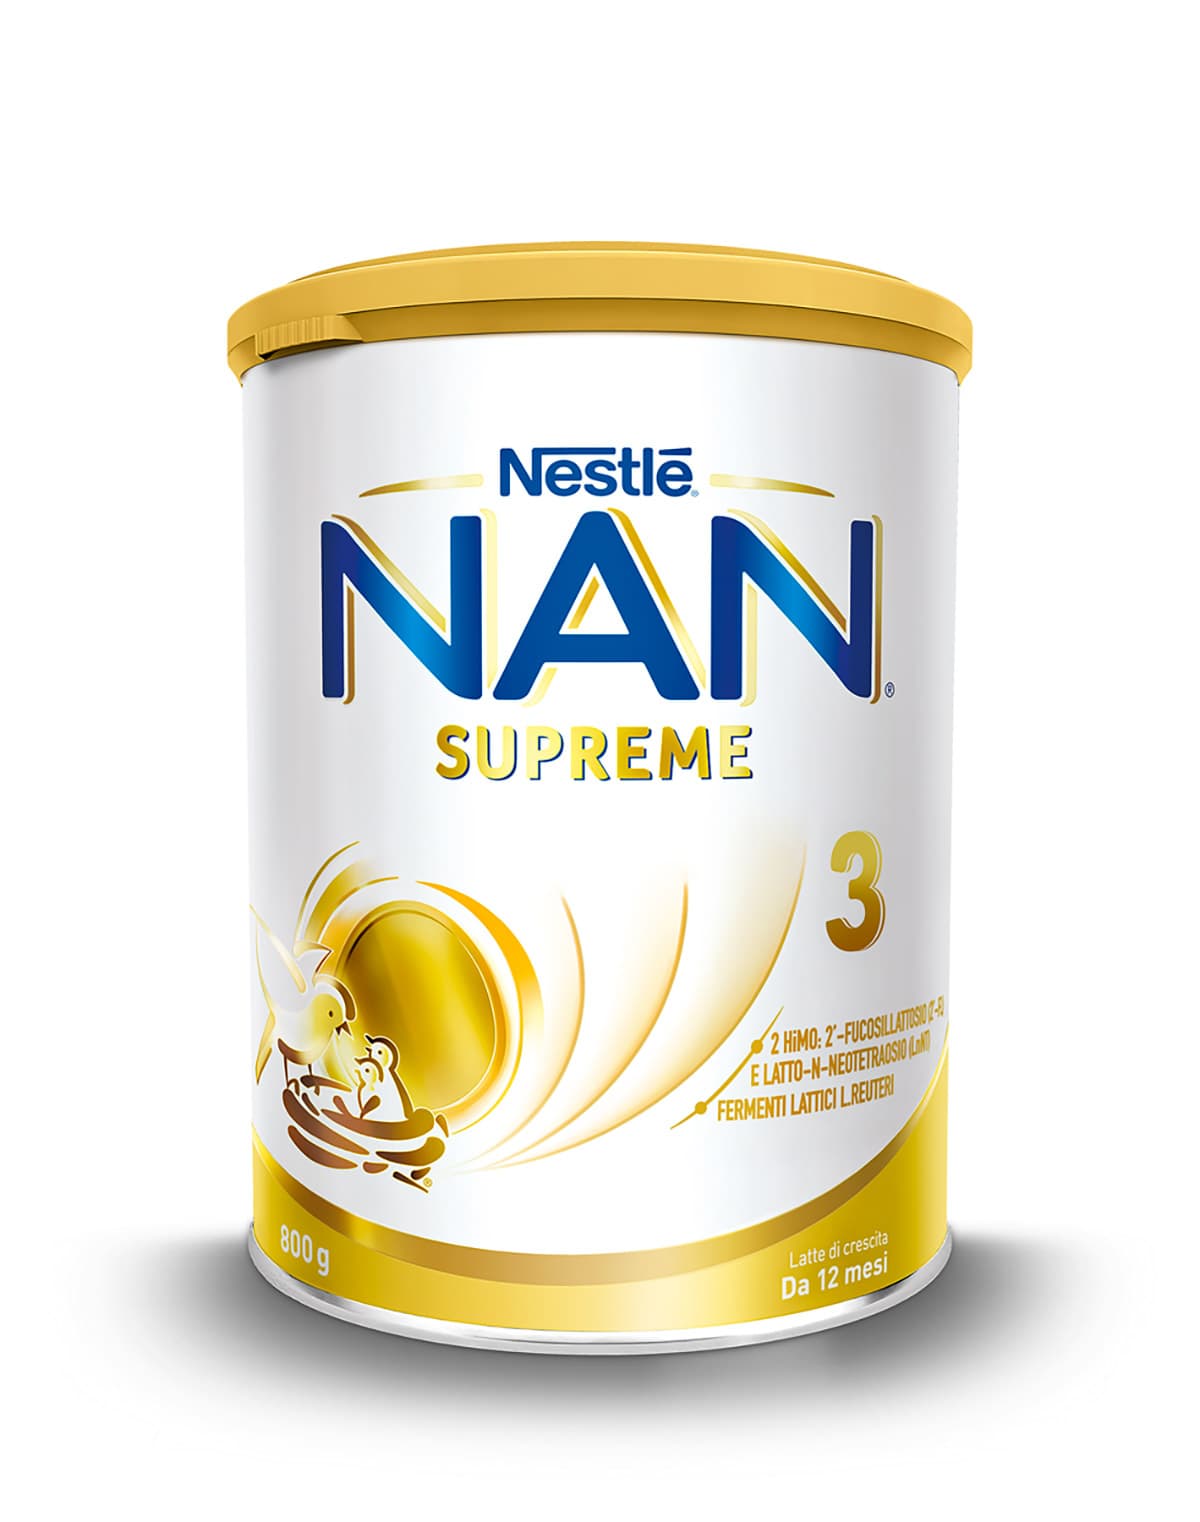 Nestlé NAN SUPREME 3 800g. Latte di crescita in polvere, dai 12 mesi